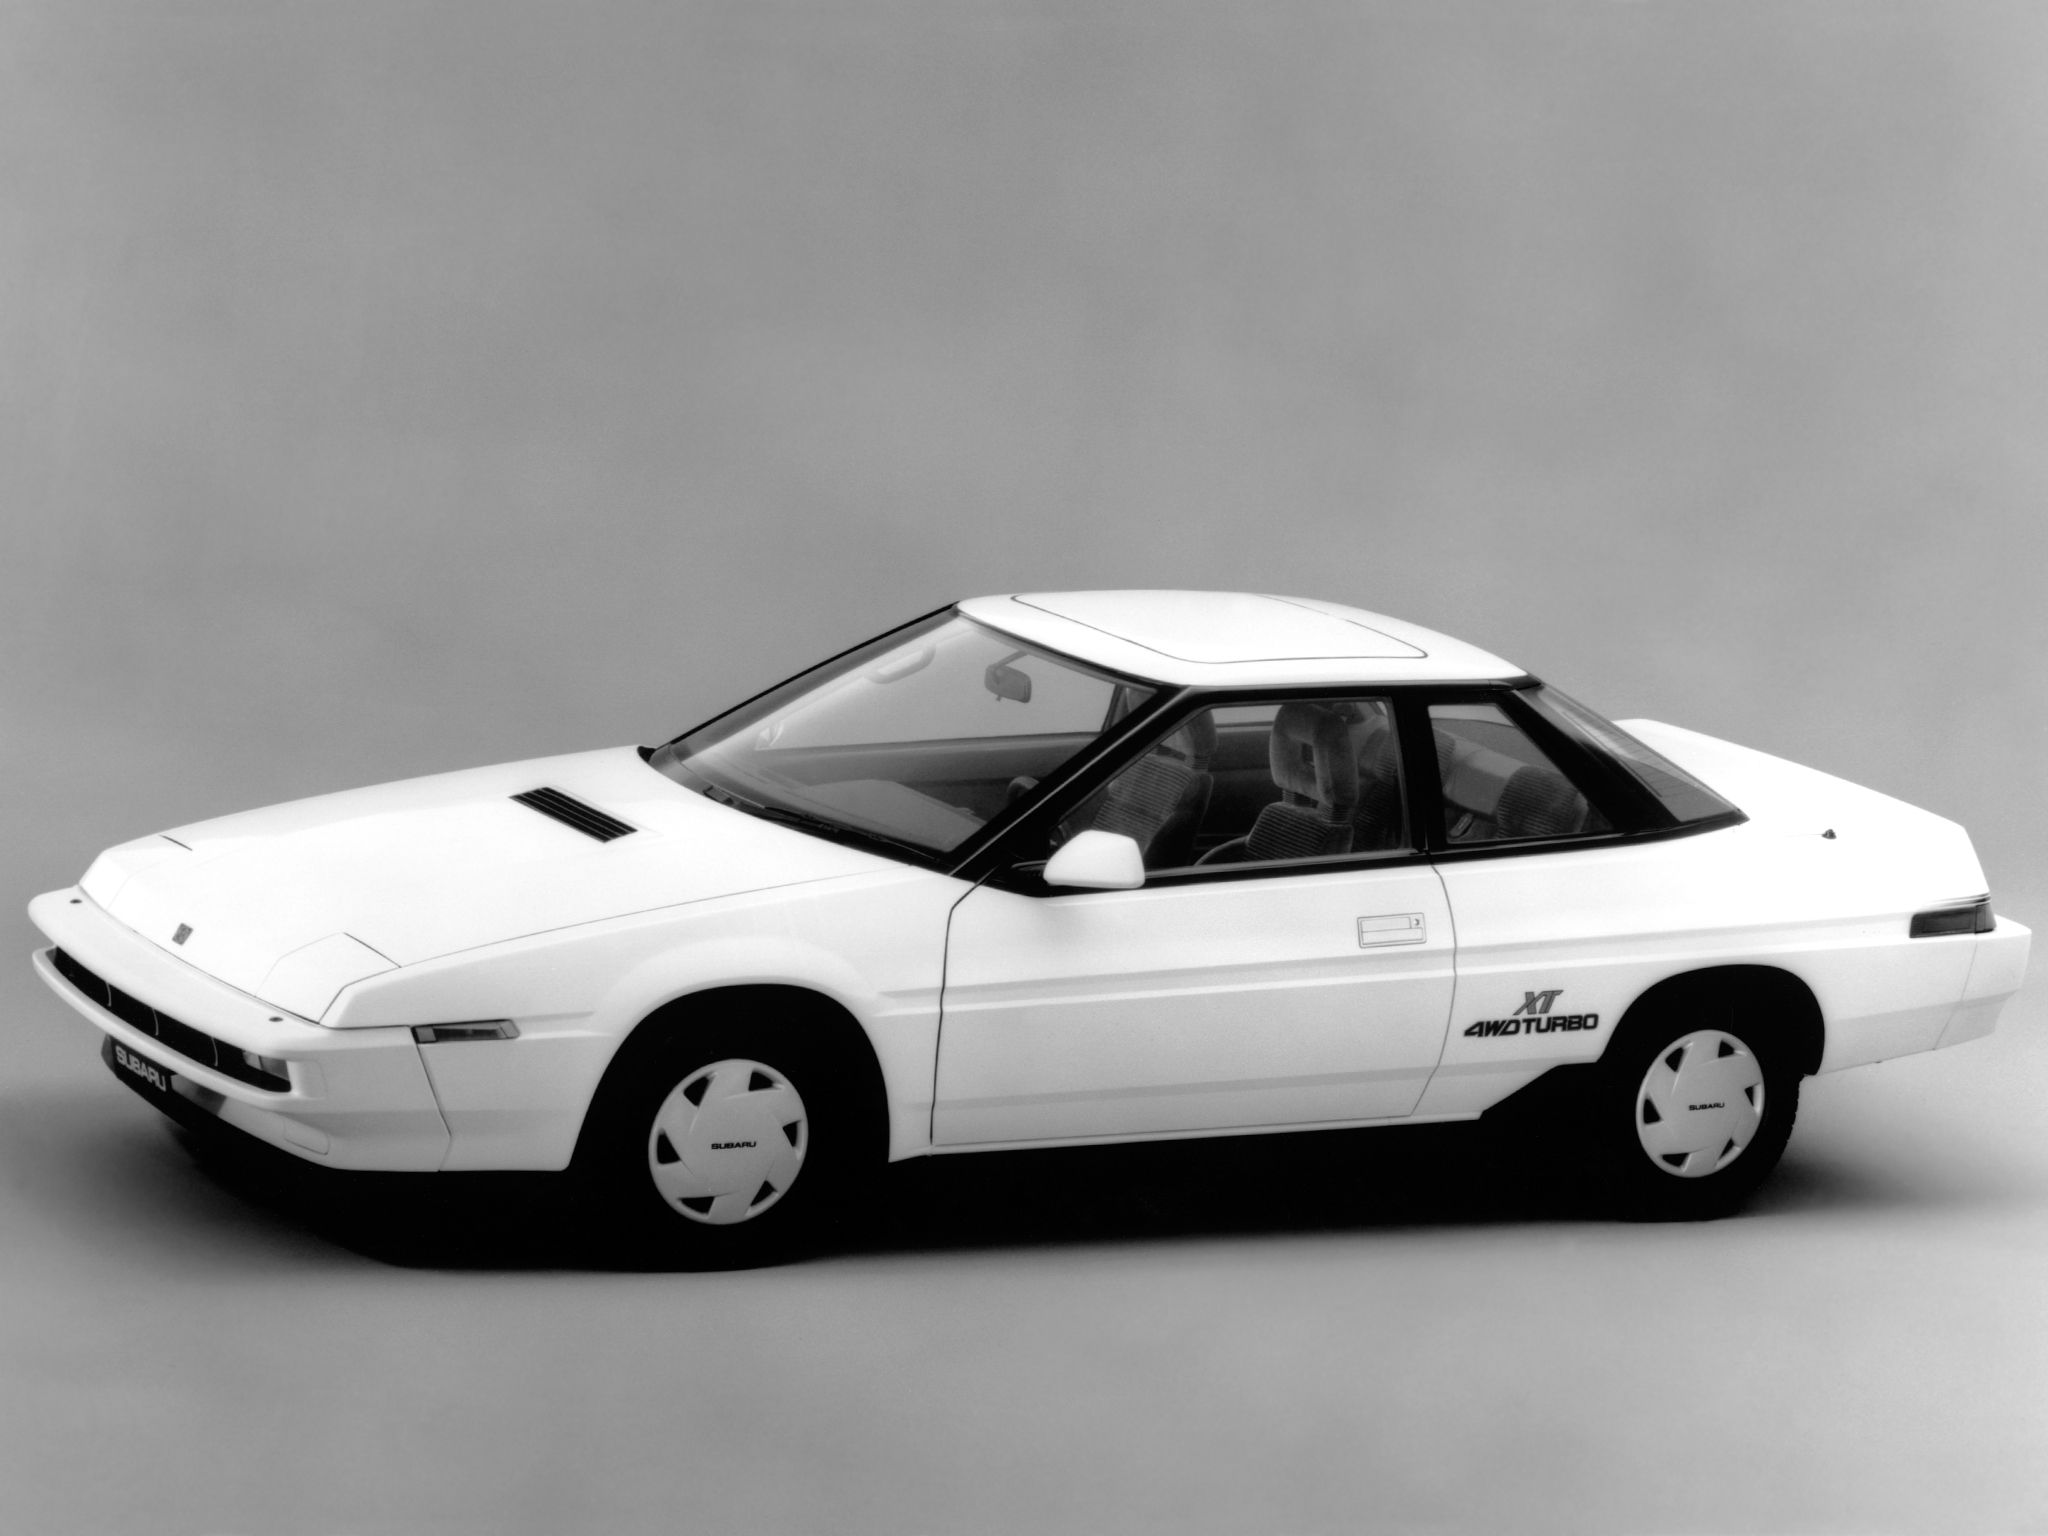 Subaru_XT_Coupe_1985 White Top Down View